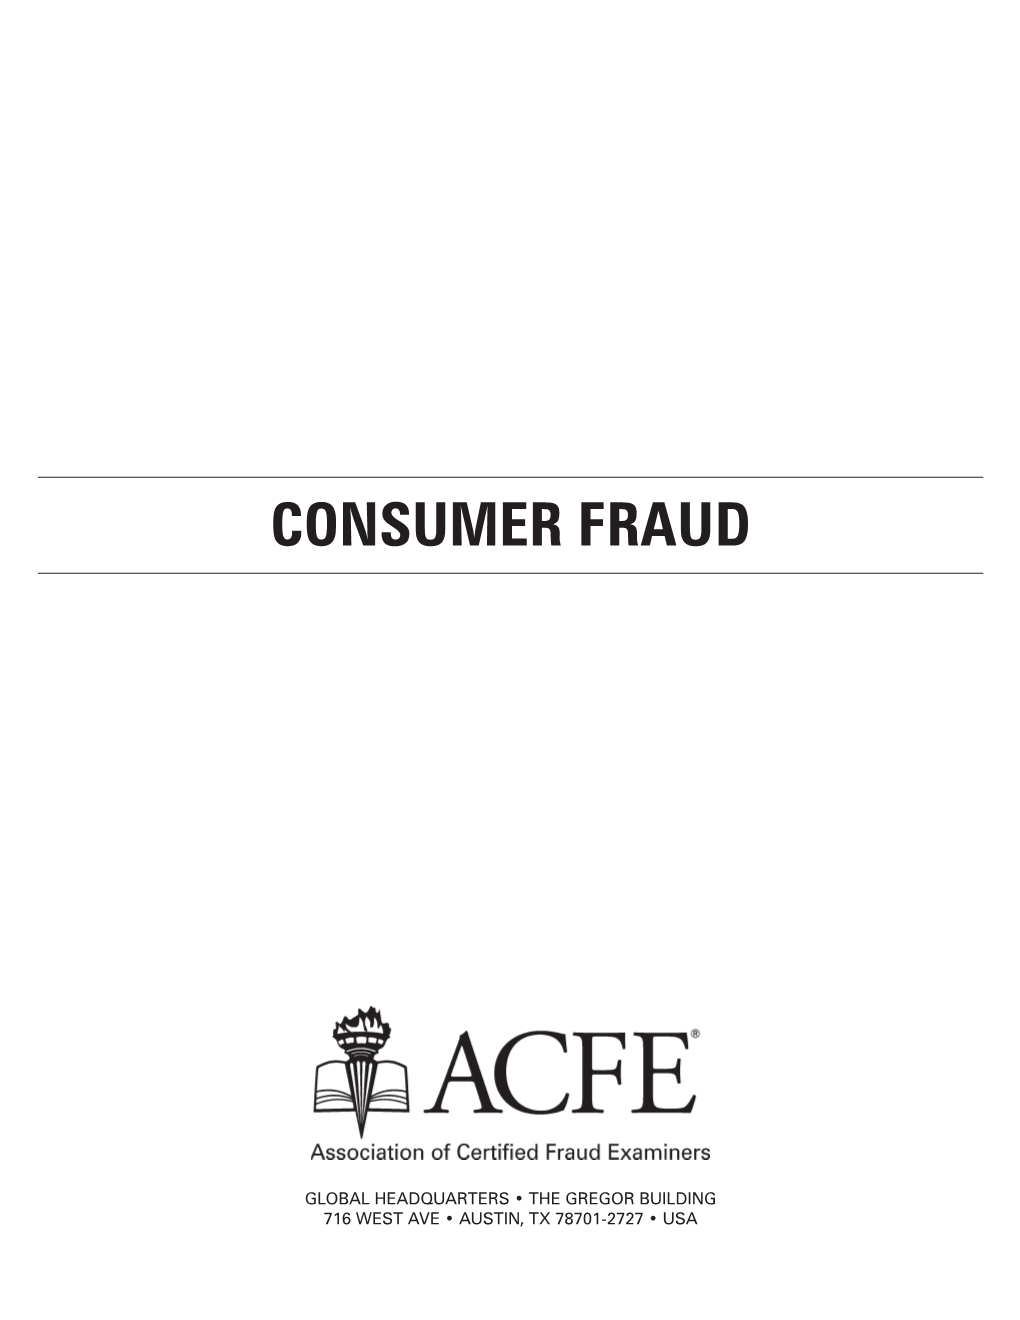 Consumer Fraud